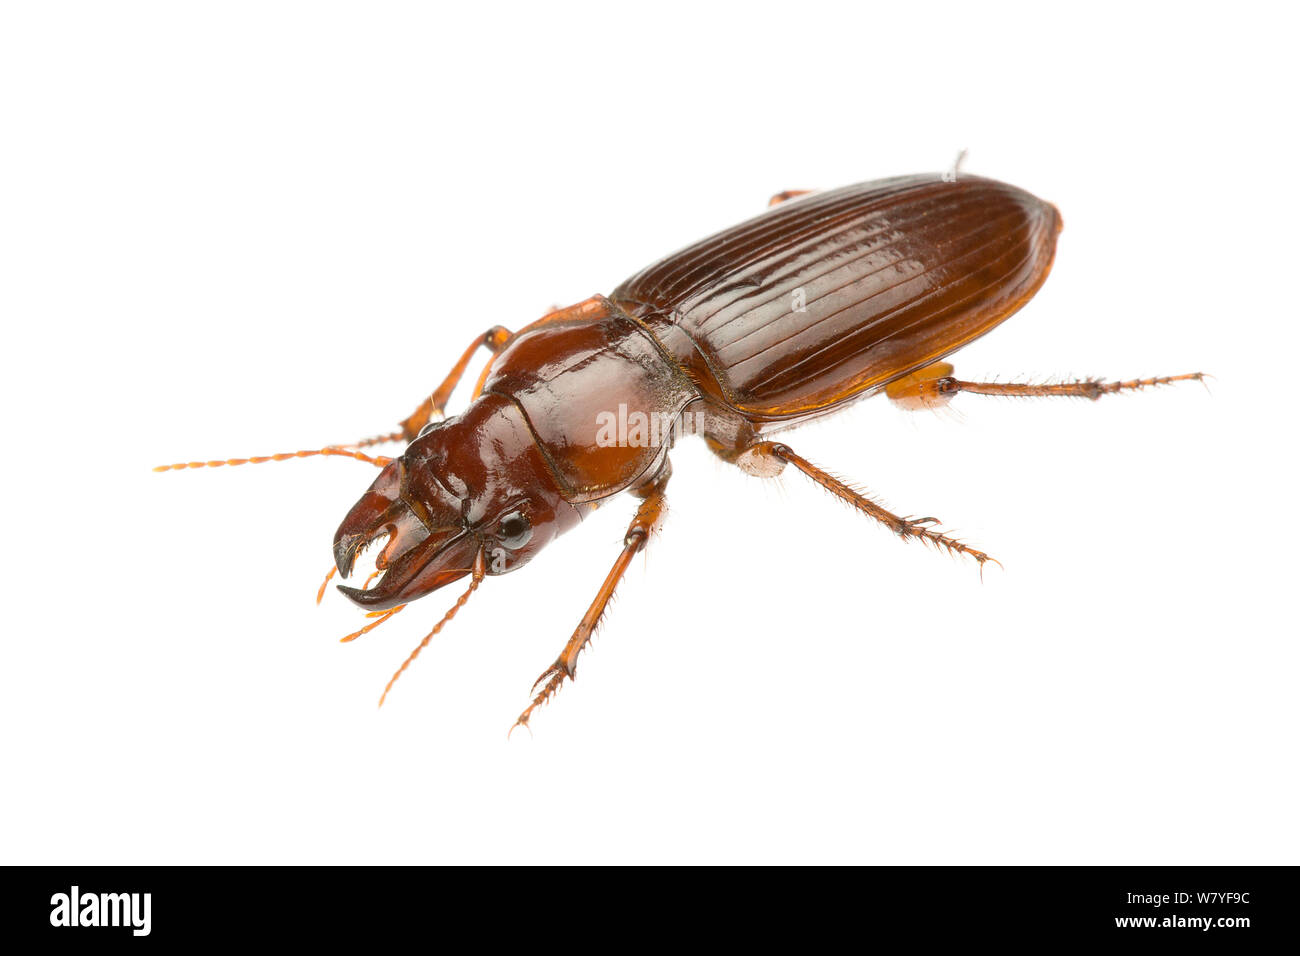 Carabid beetle (Phorticosomus sp), Western Australia. meetyourneighbours.net project Stock Photo